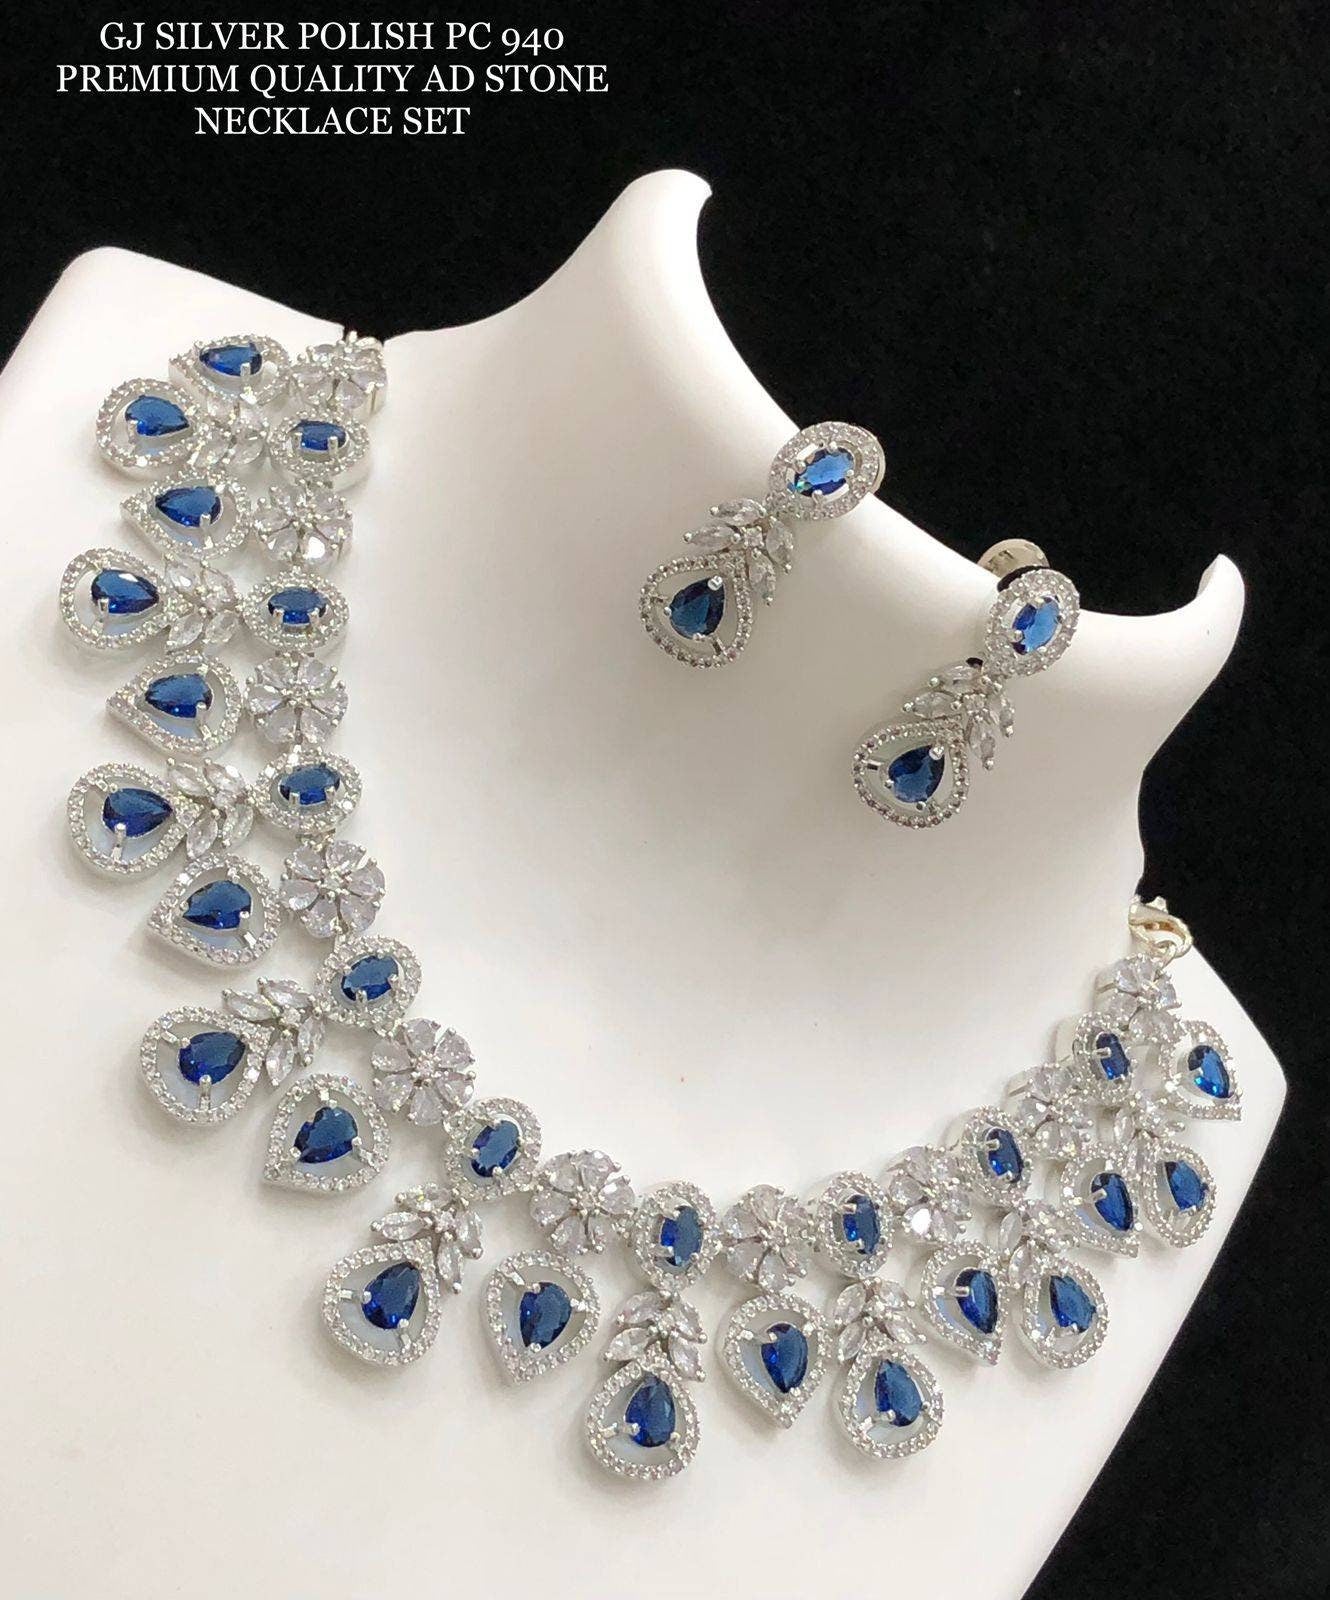 GJ silver polish premium quality AD stone necklace jewellery set, indian wedding jewellery, indian gold jewellery, jewellery for wedding